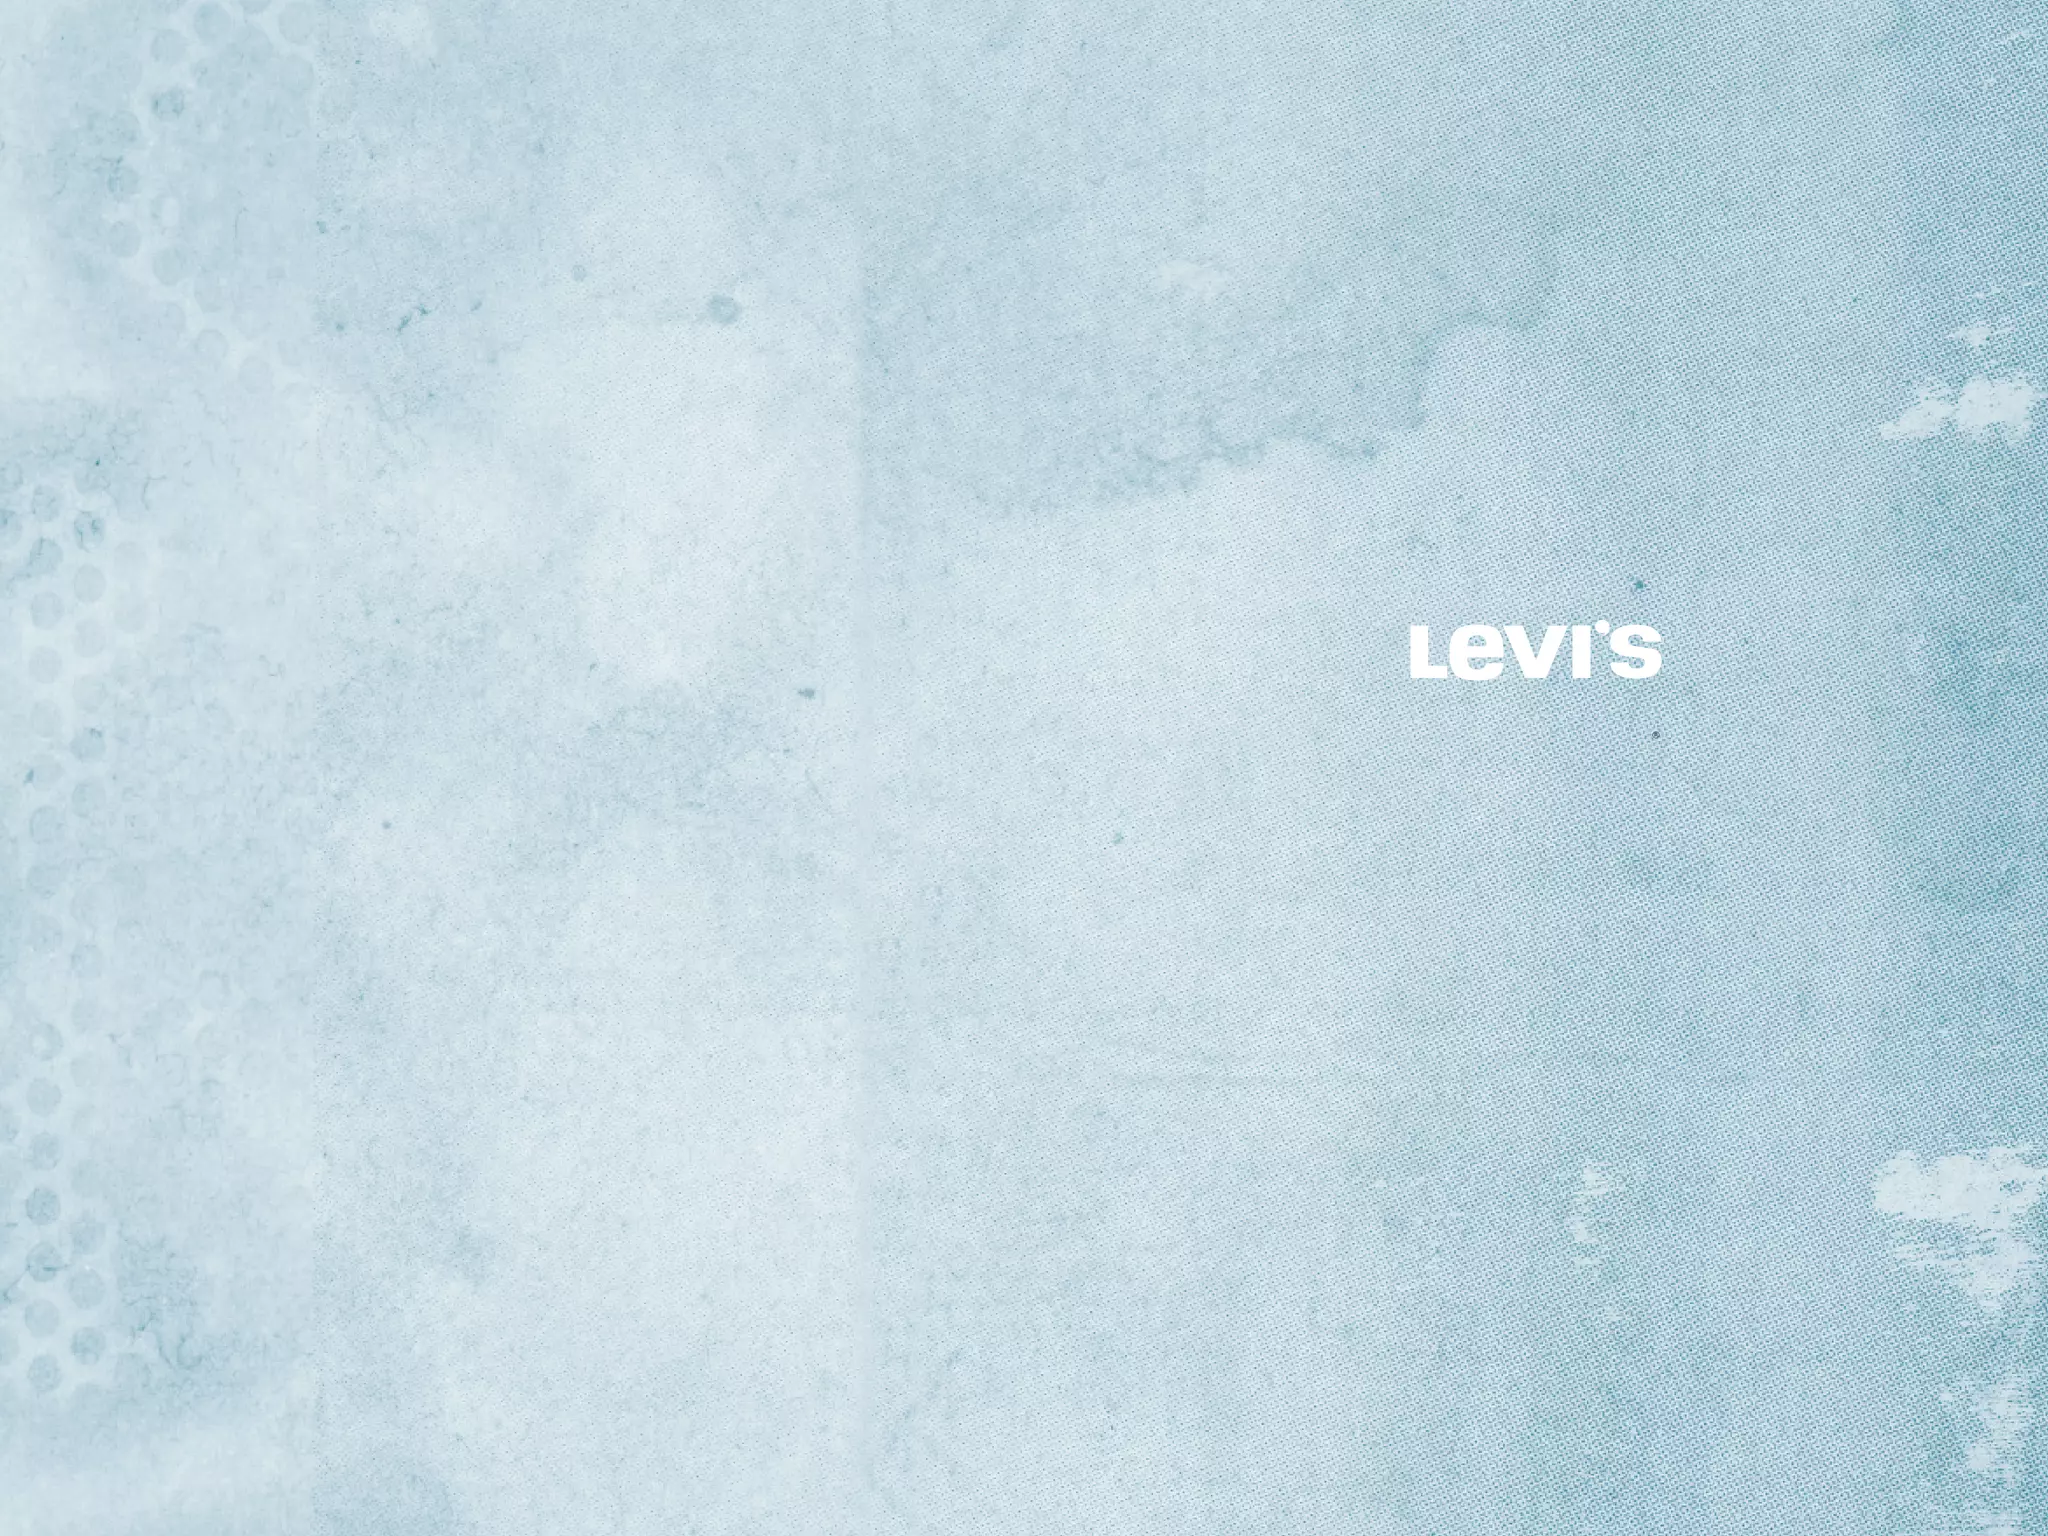 Levi's brand book